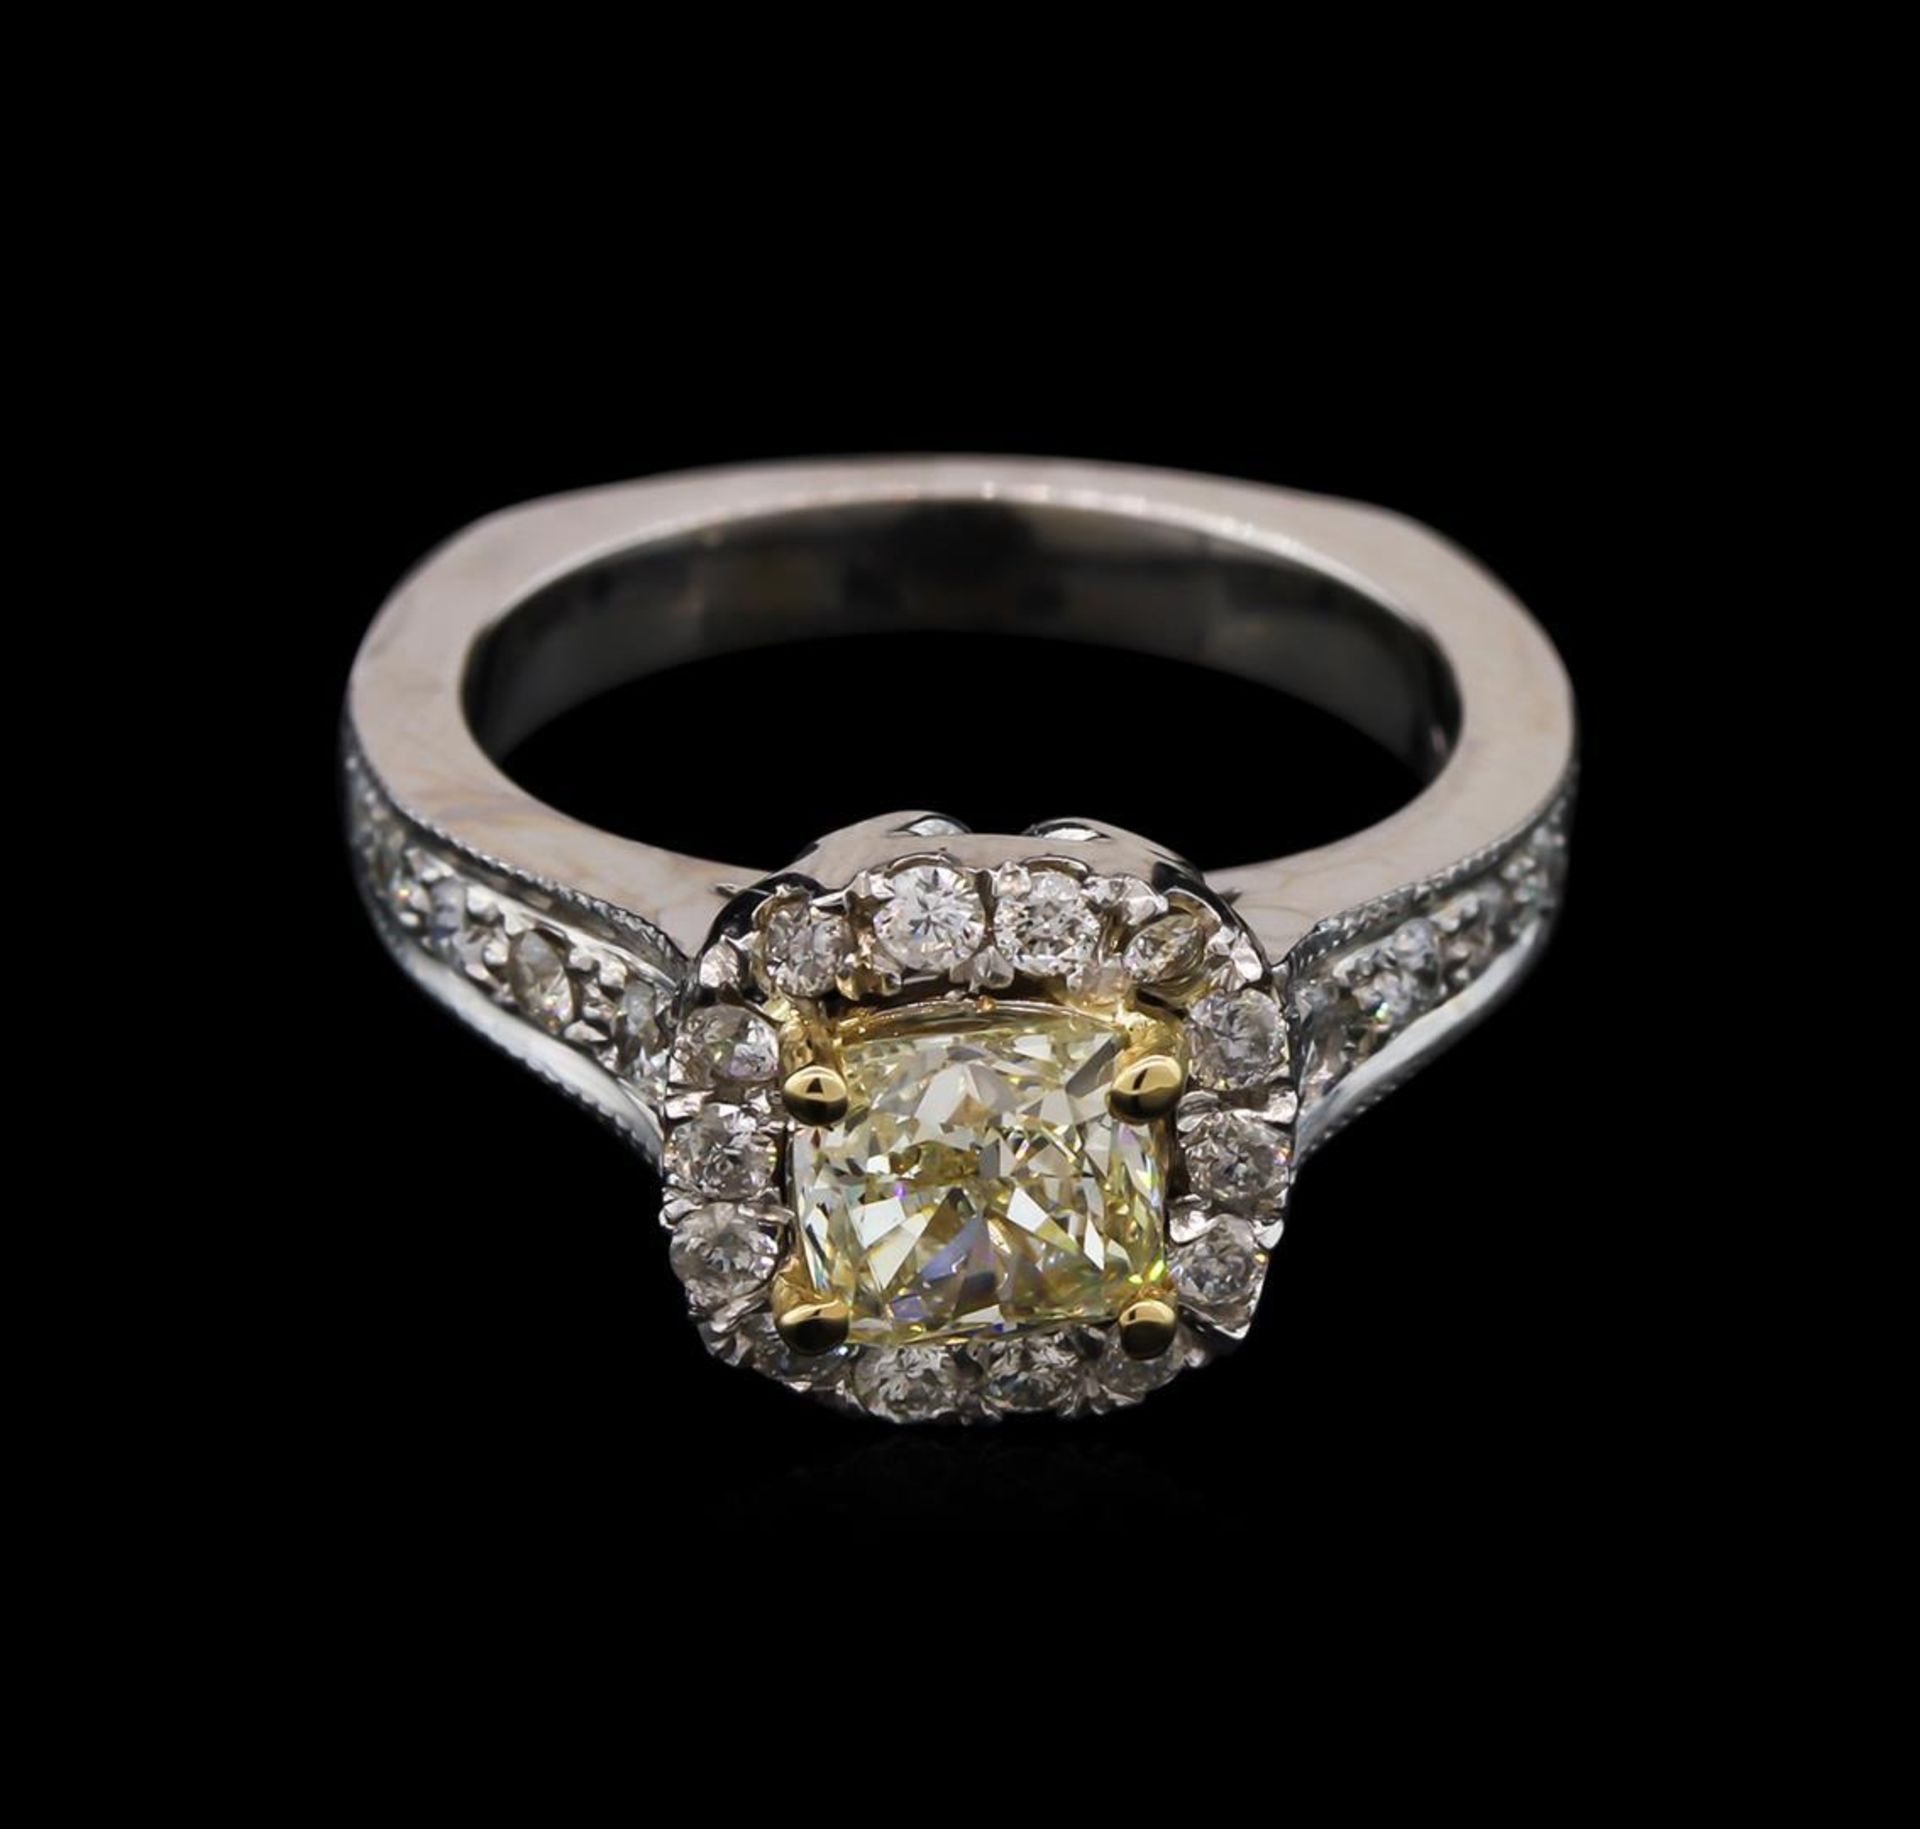 1.71 ctw Light Yellow Diamond Ring - 14KT White Gold - Image 2 of 3